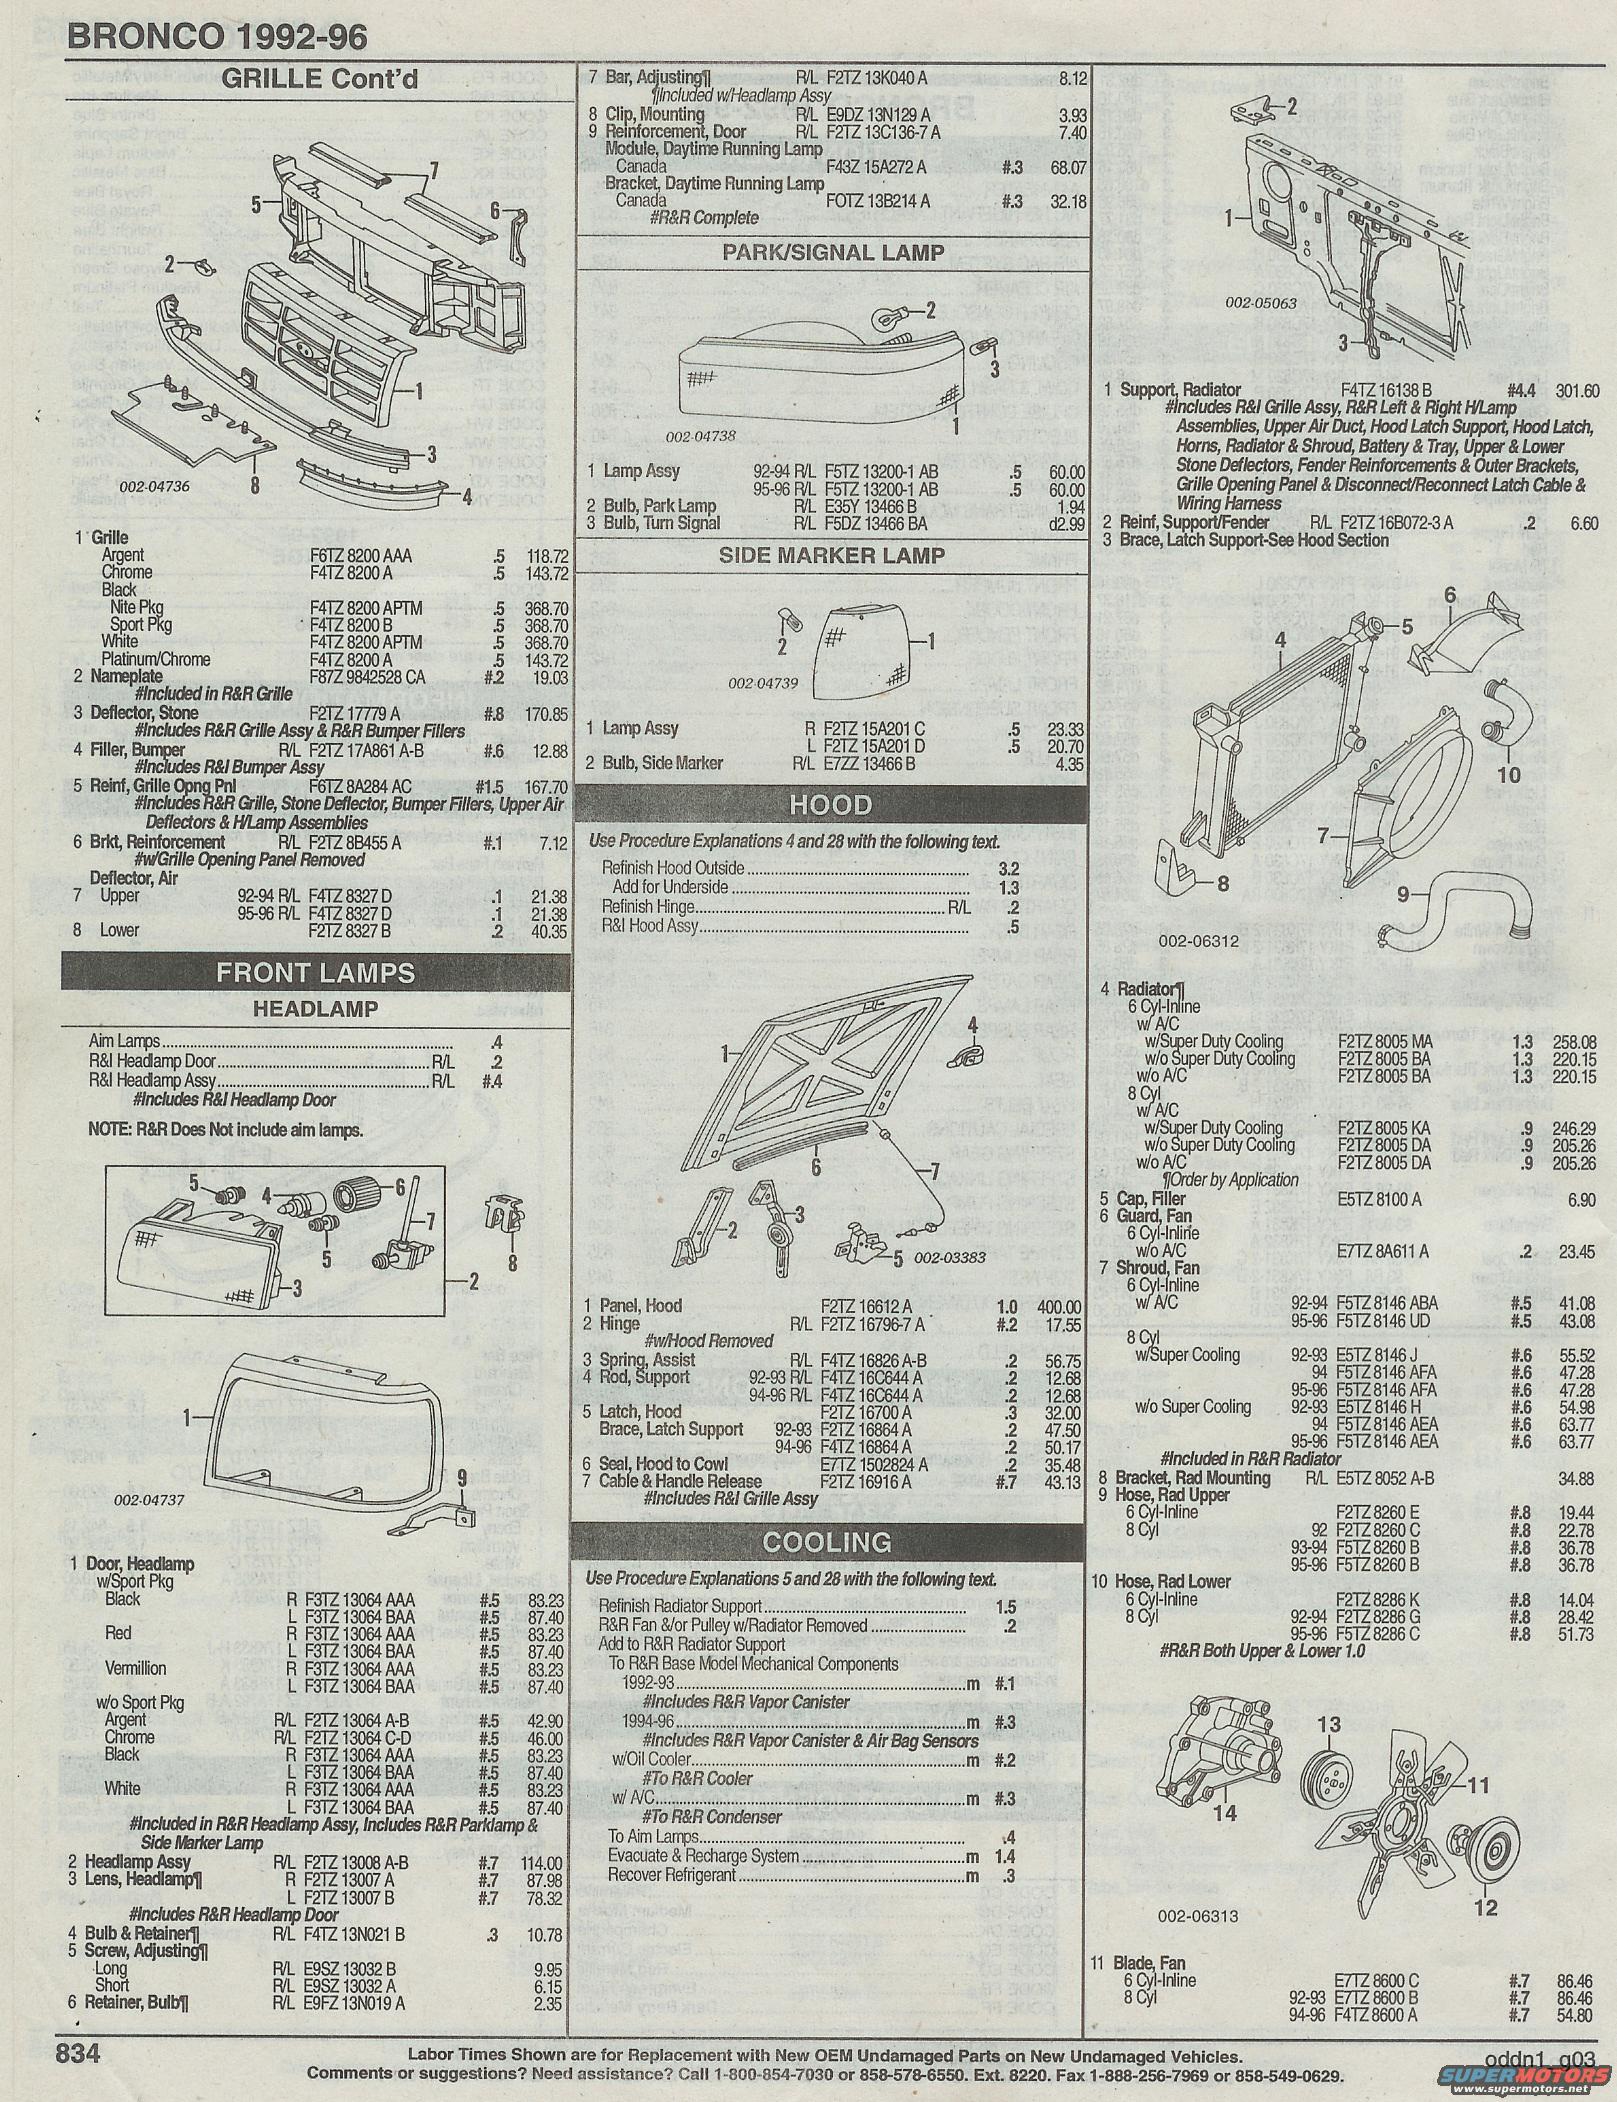 1996 Ford bronco brochure #7